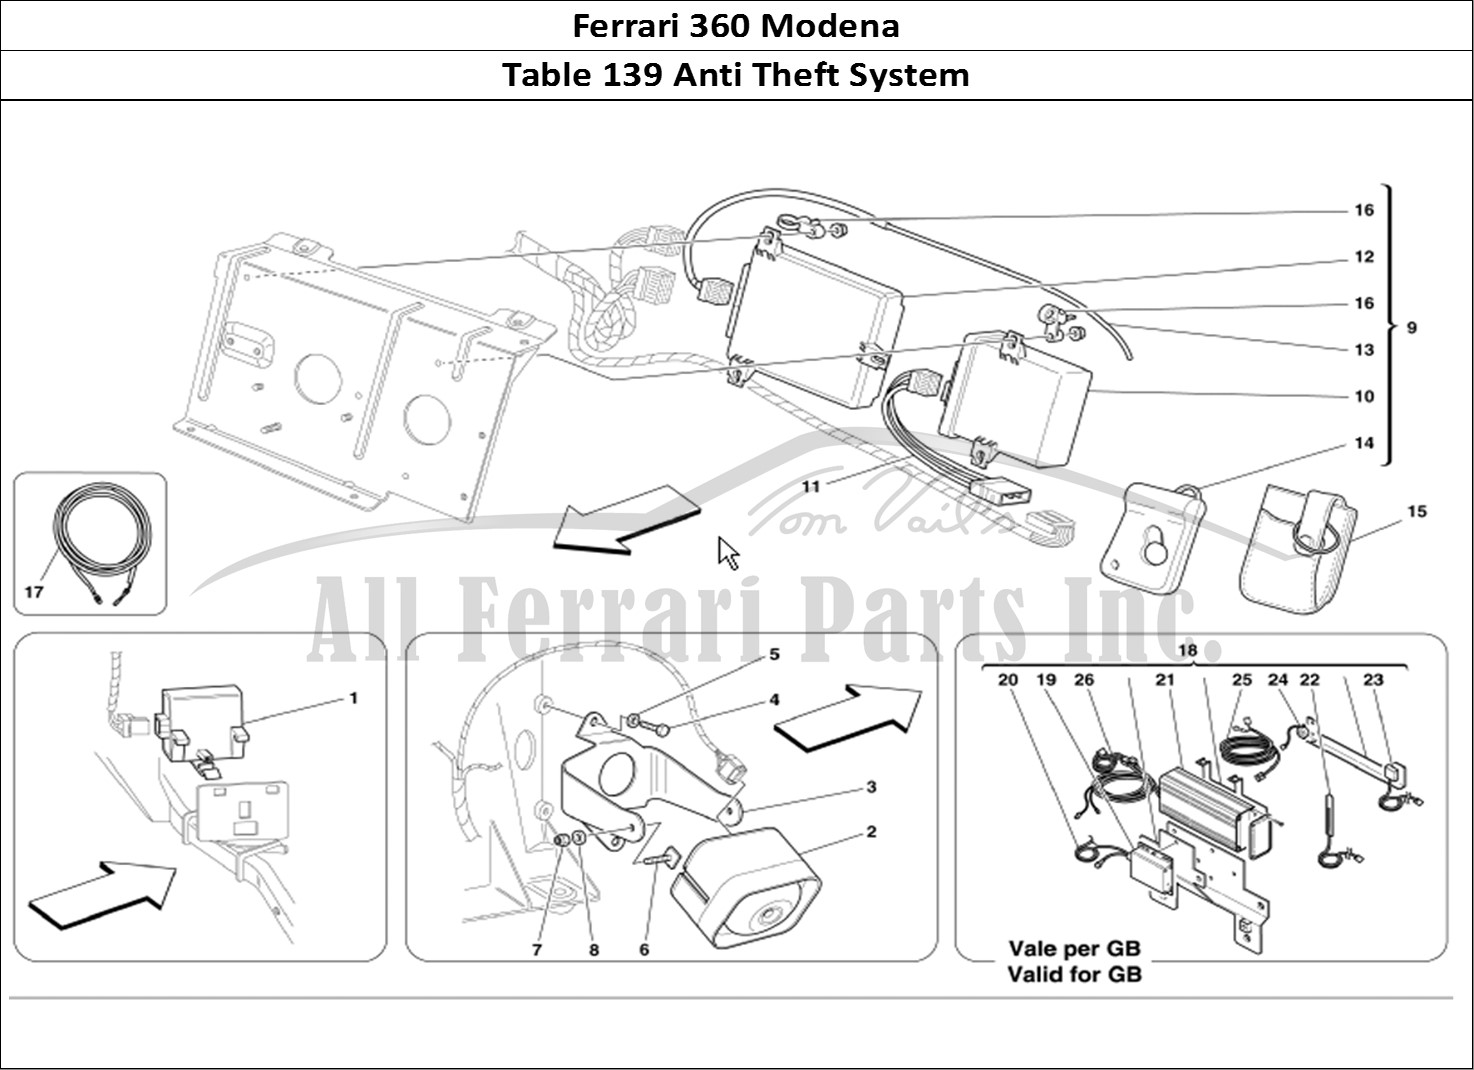 Ferrari Parts Ferrari 360 Modena Page 139 Anti Theft Electrical Boa